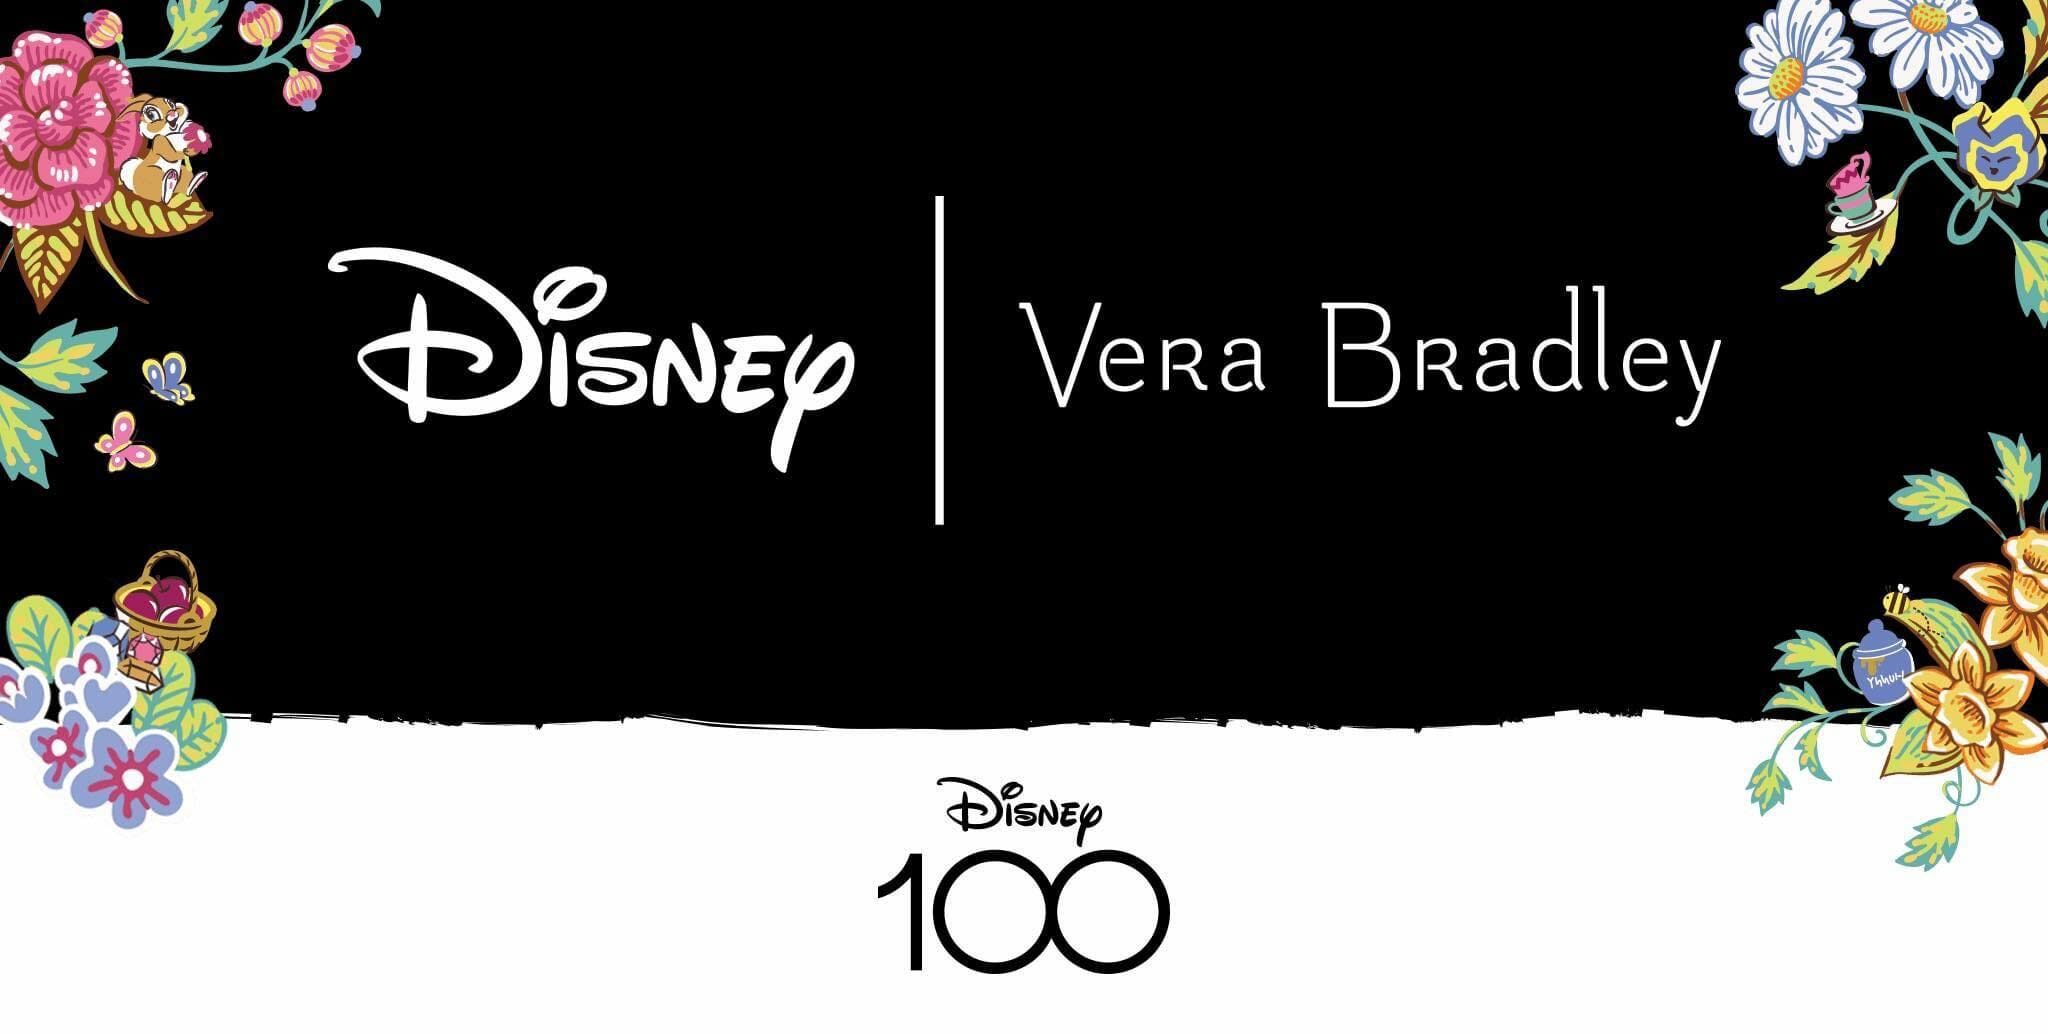 Disney 100 Vera Bradley Arrives on Shop Disney